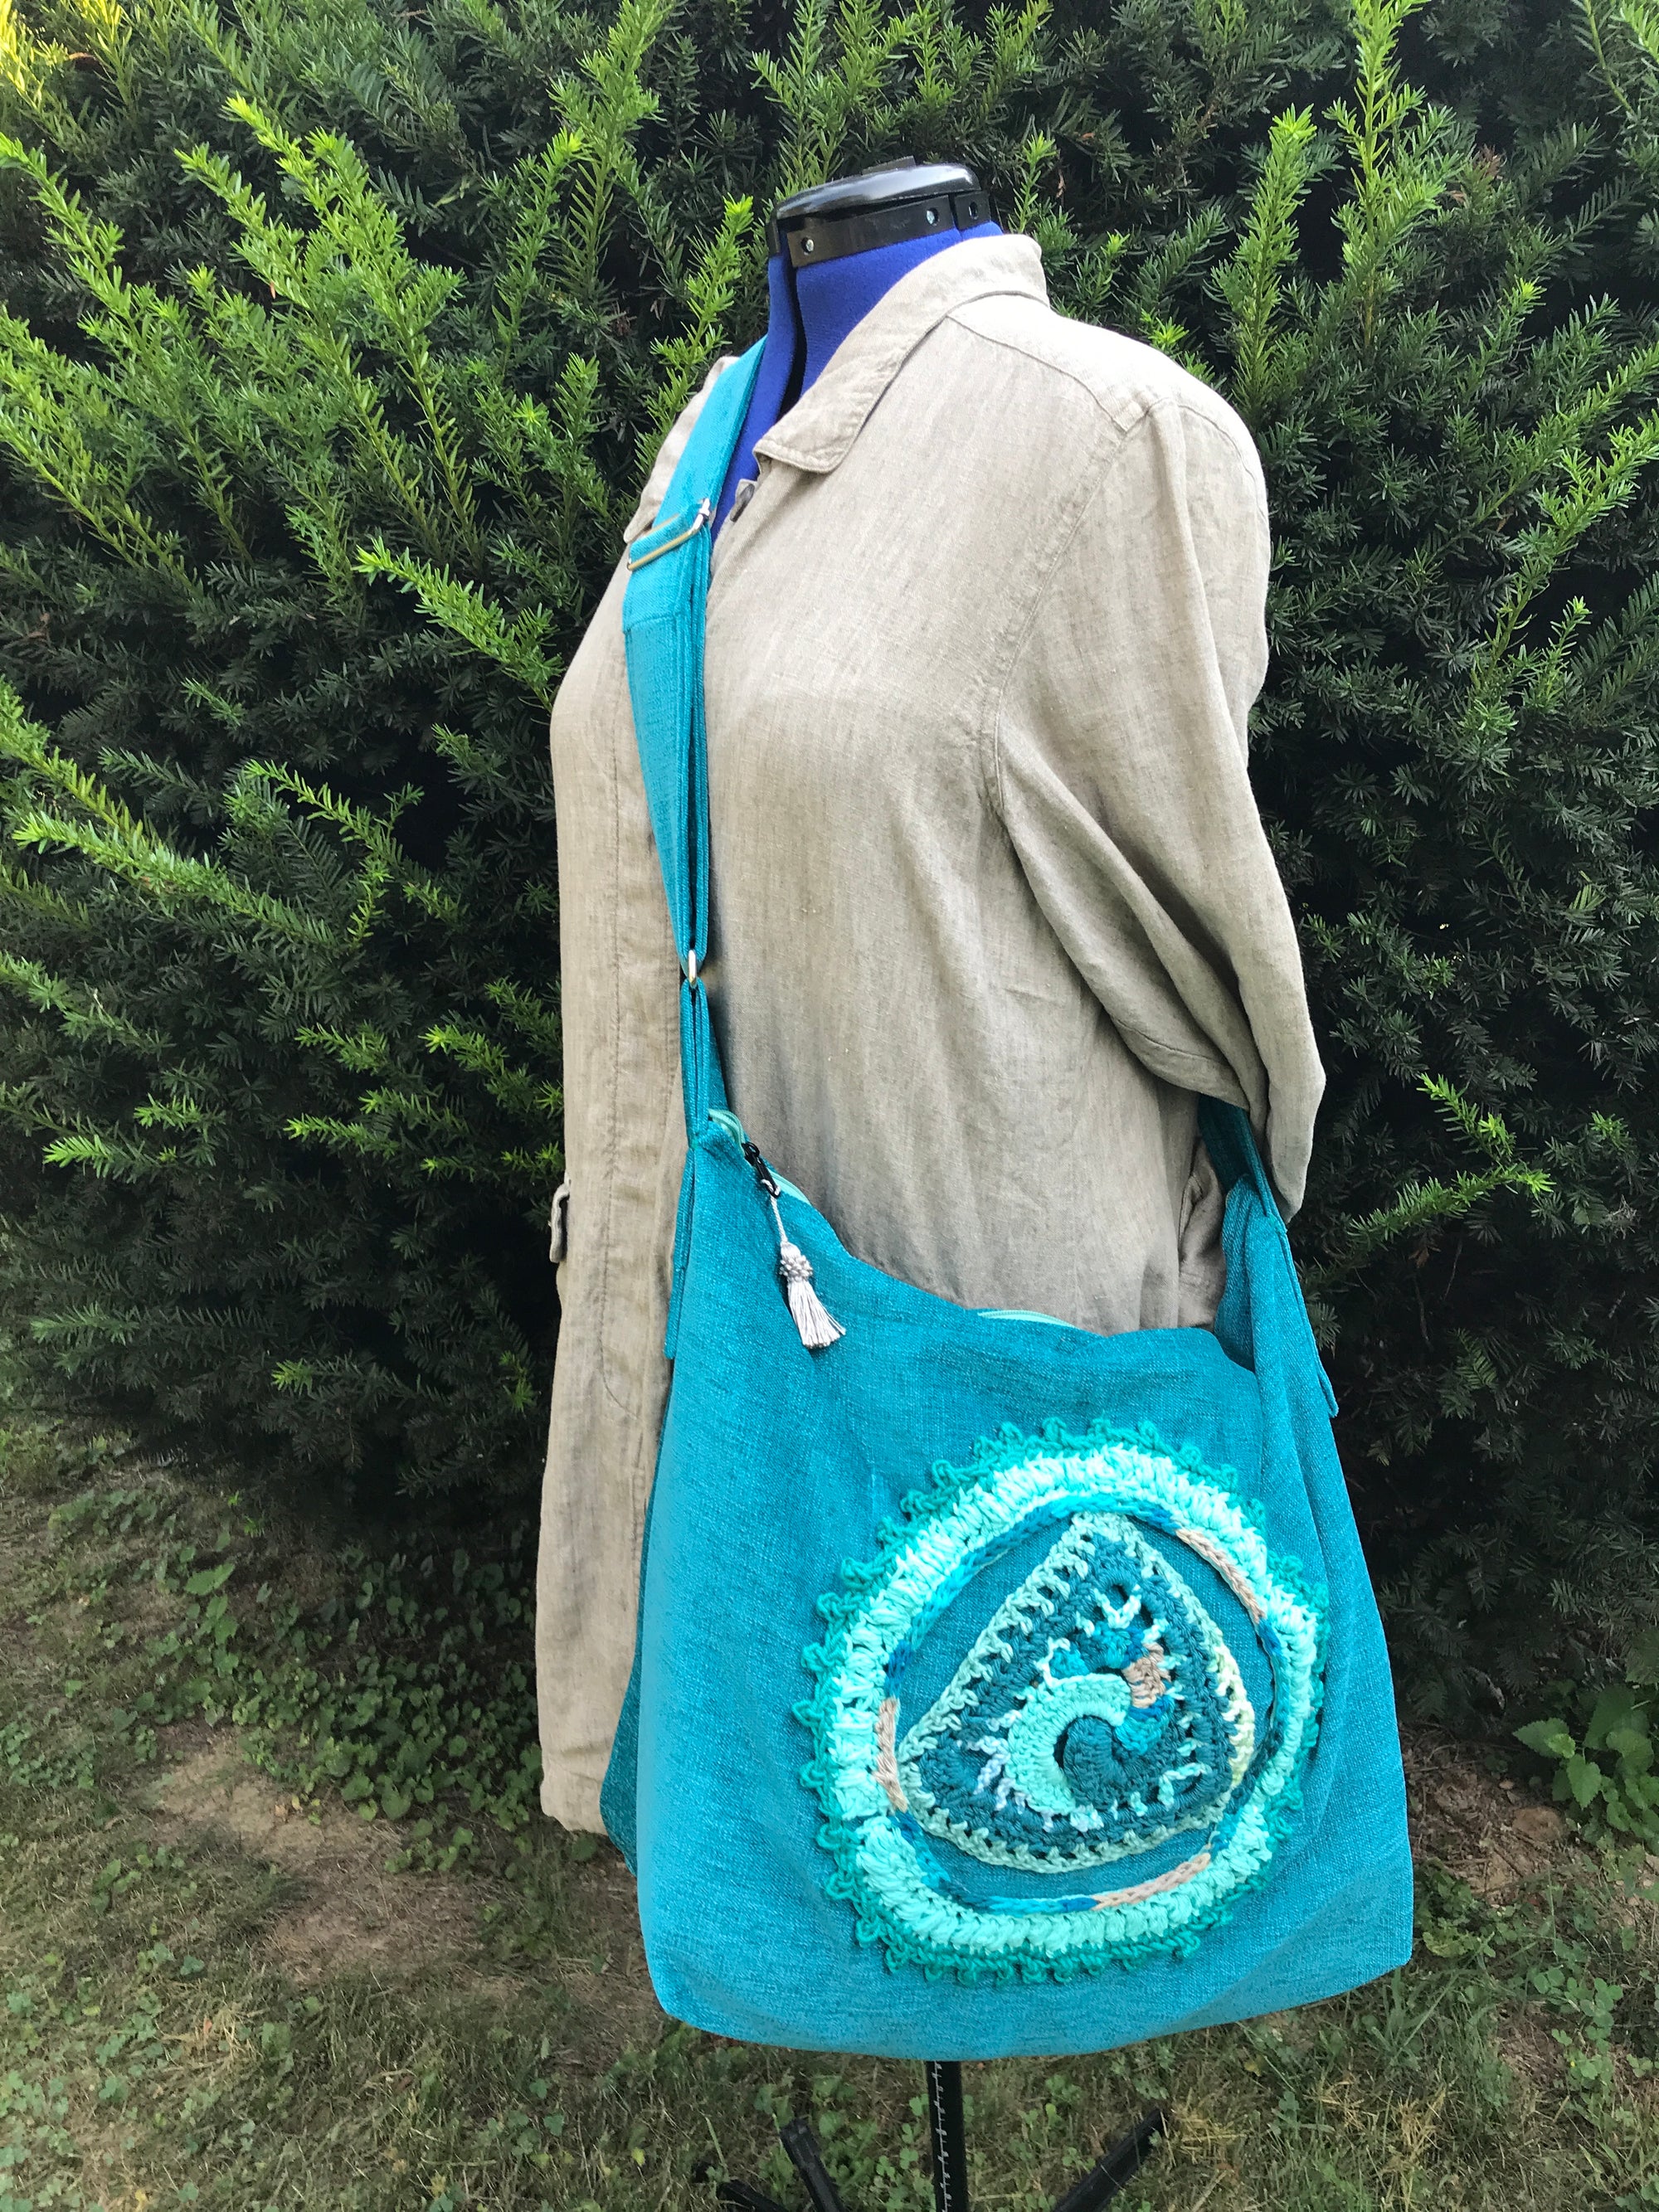 Large Tote Bag Weekender Teal Blue Crochet Accent